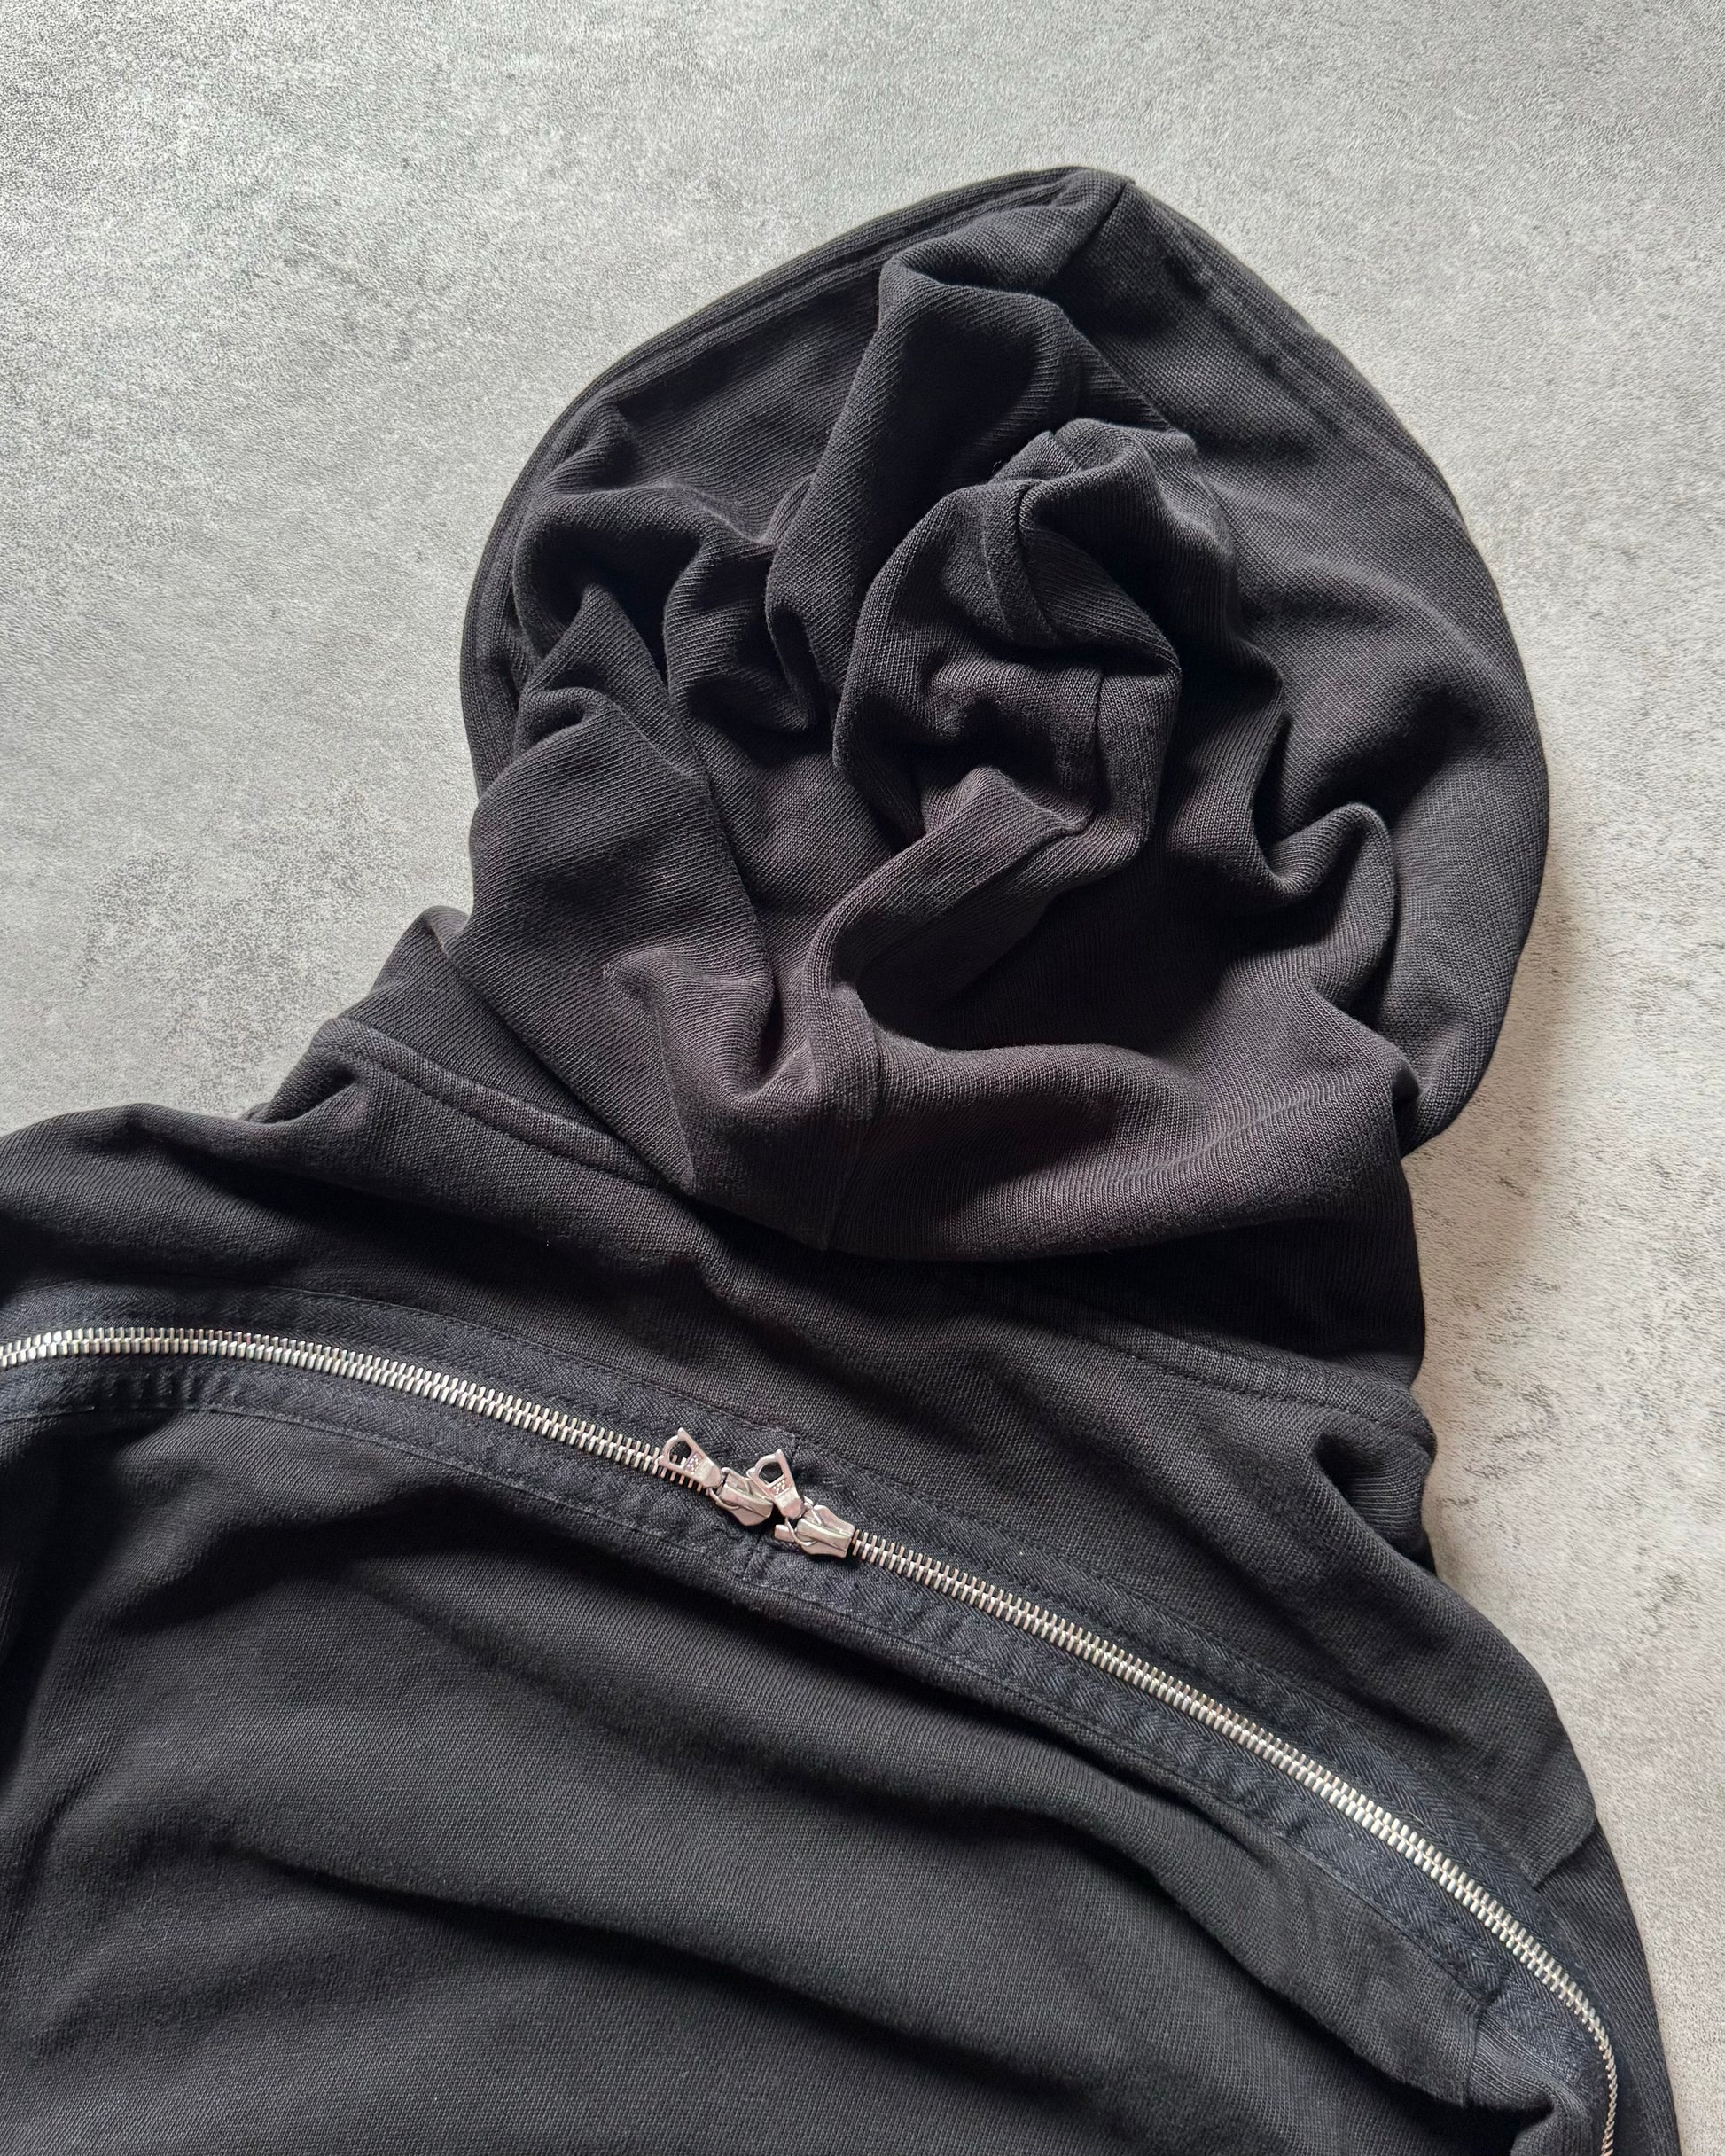 AW2014 Dries Van Noten Full Back-Zip Black Hooded Sweater (M) - 5